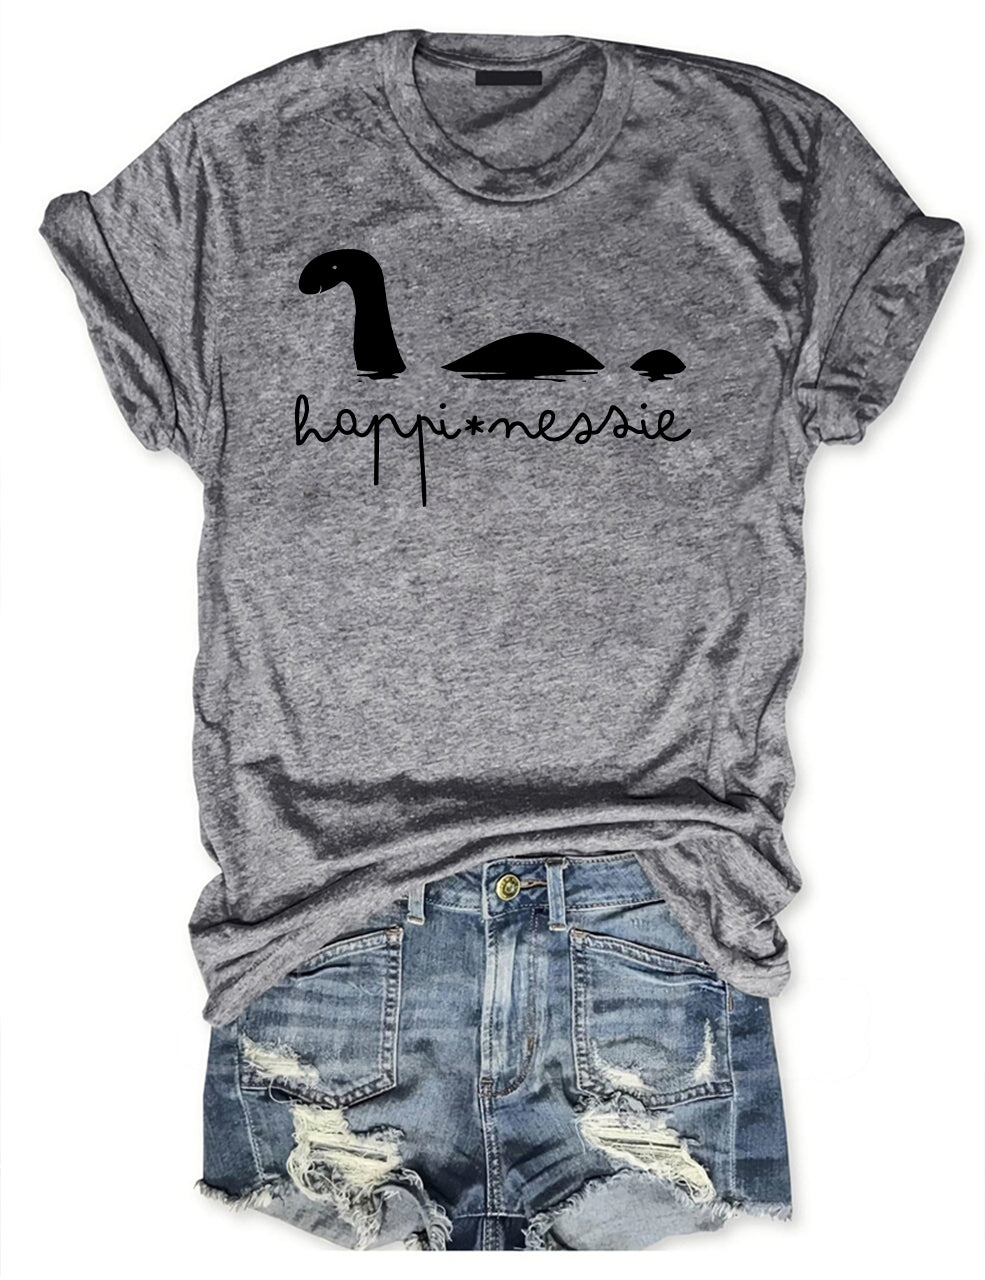 Happinessie Happy Loch Ness Monster T-shirt